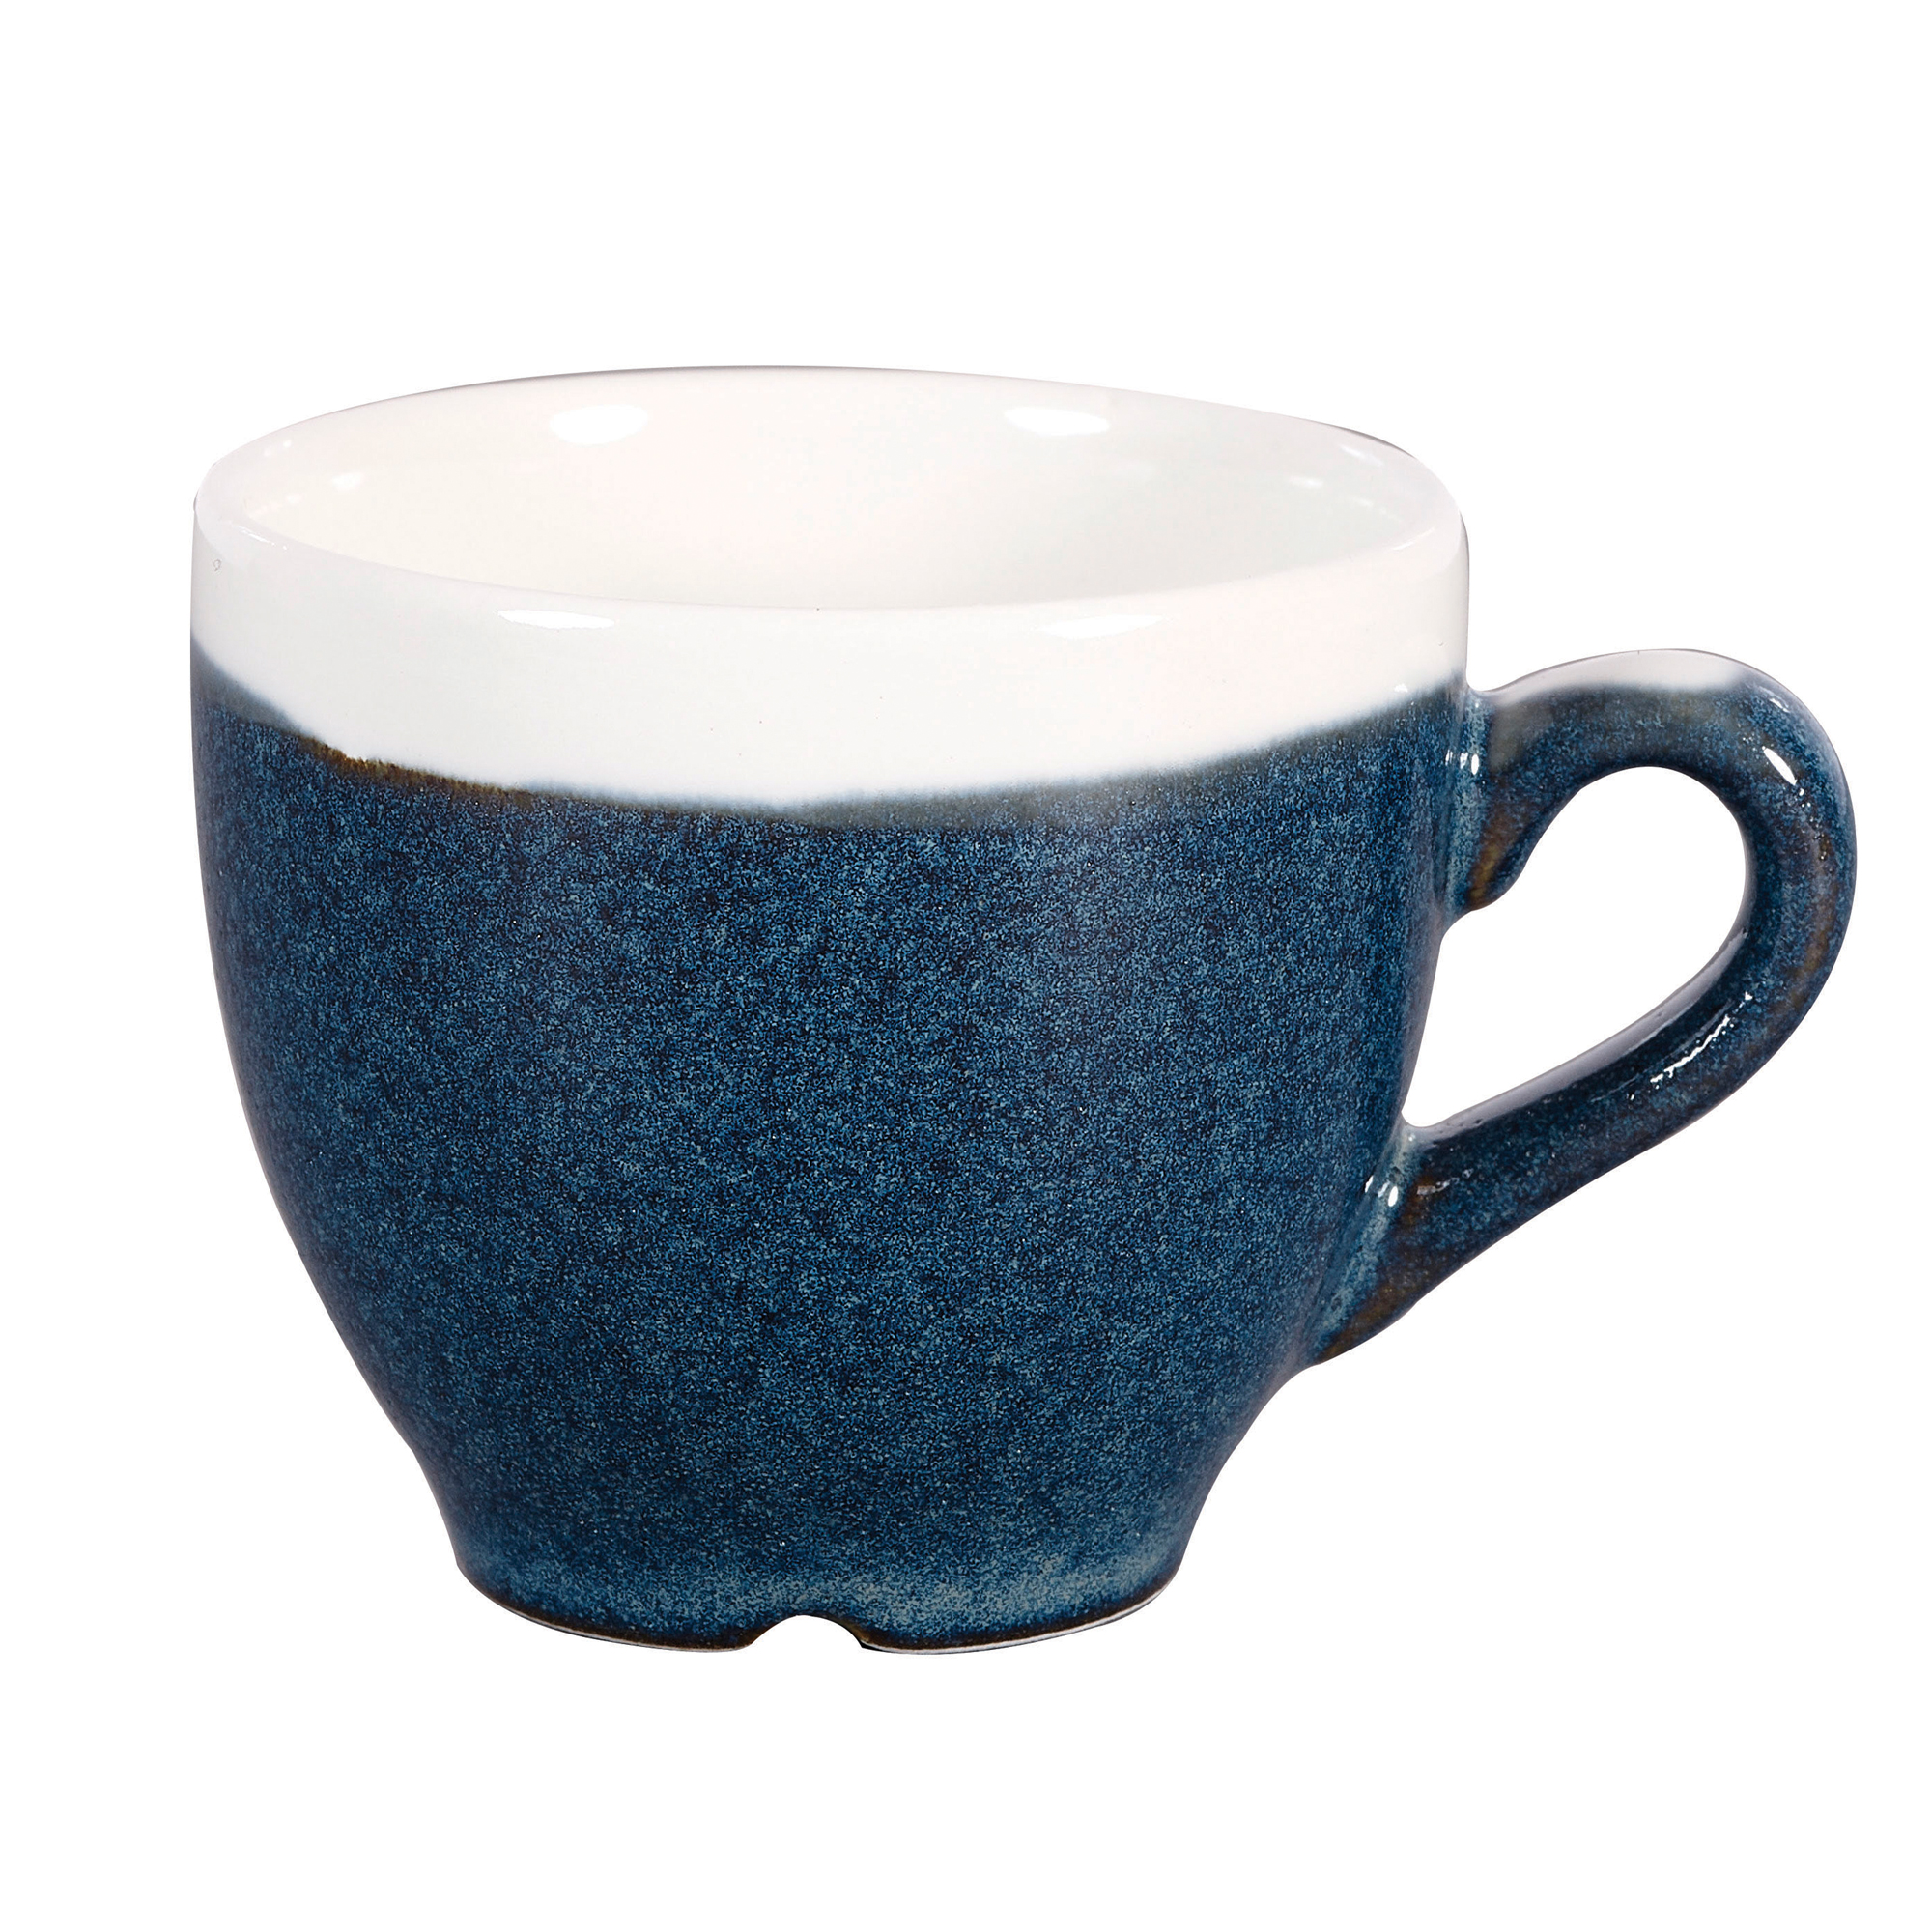 Monochrome Sapphire Blue Espresso Cups At Drinkstuff